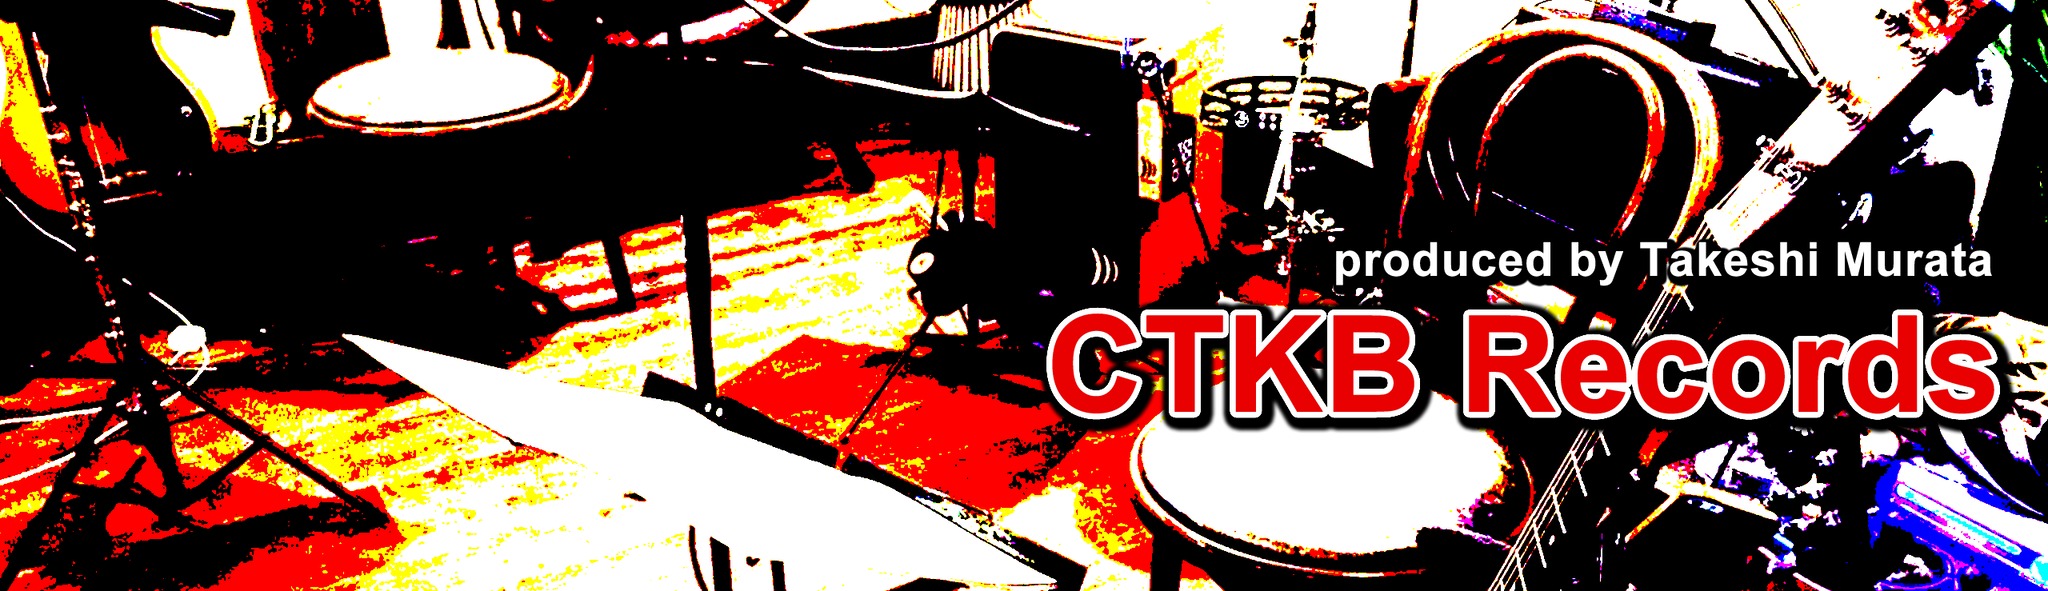 CTKB Records